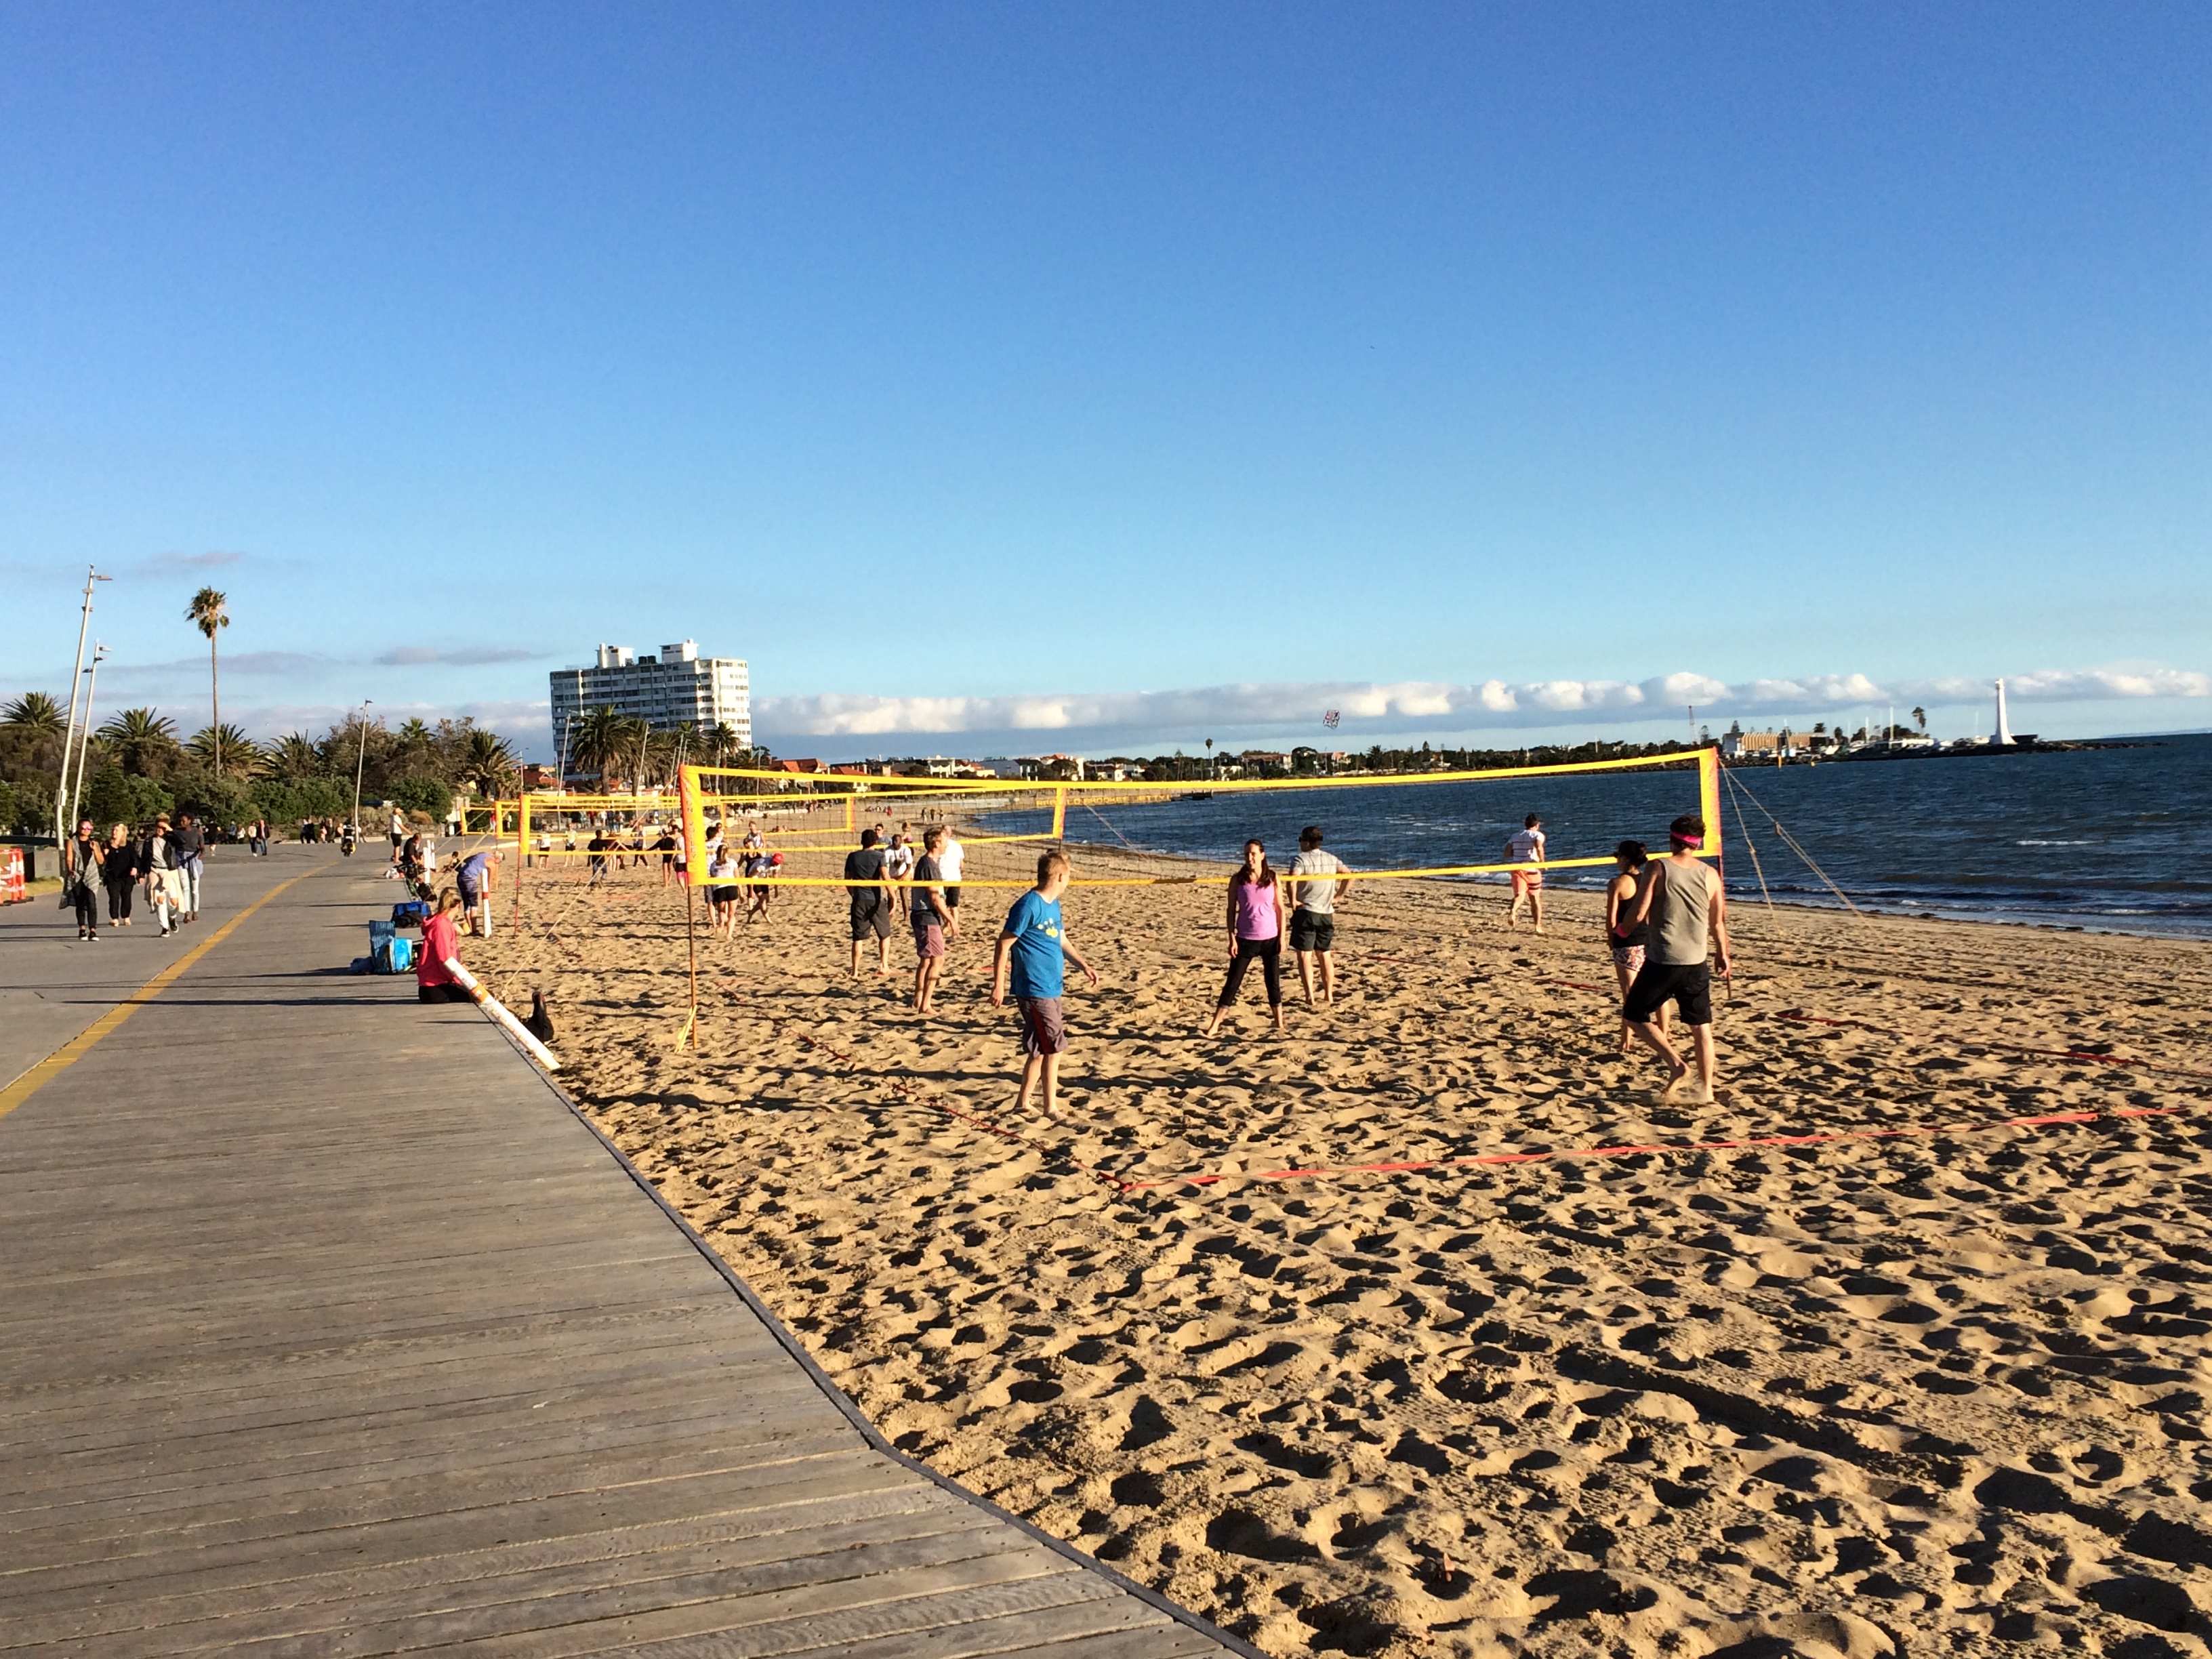 Volleyball at St Kilda beach